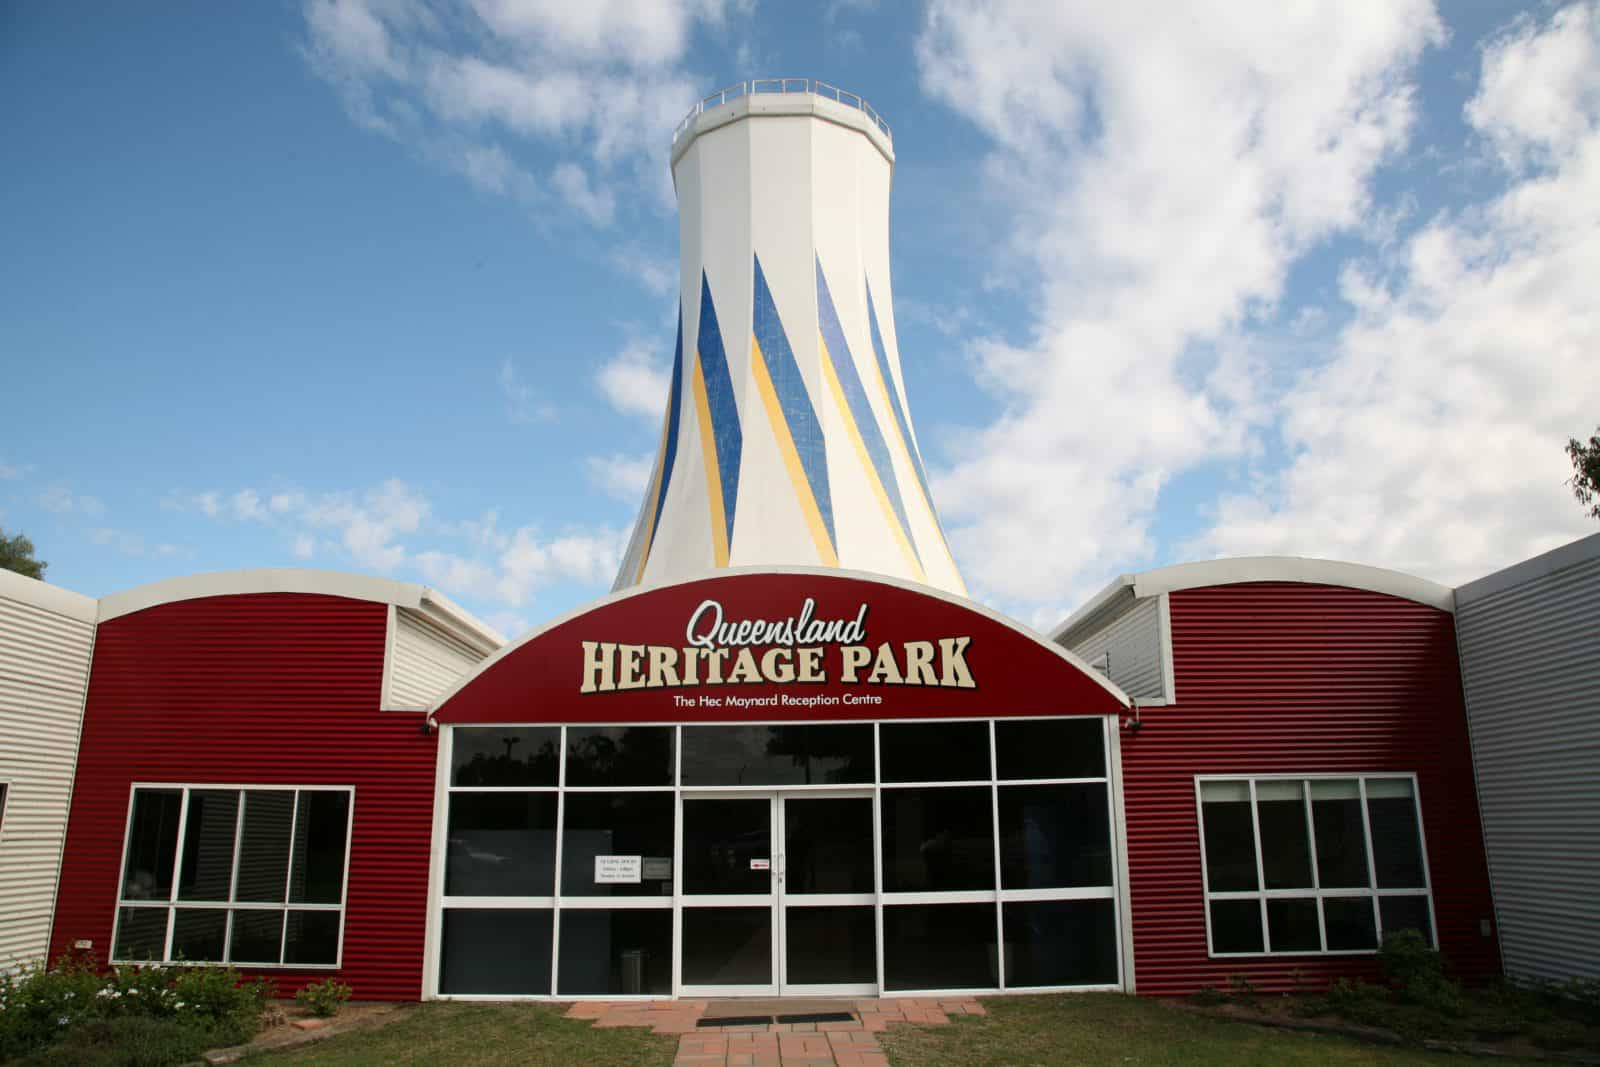 Find the Rural Hinterland Visitor Information Centre at the Queensland Heritage Park, Biloela, CQ.